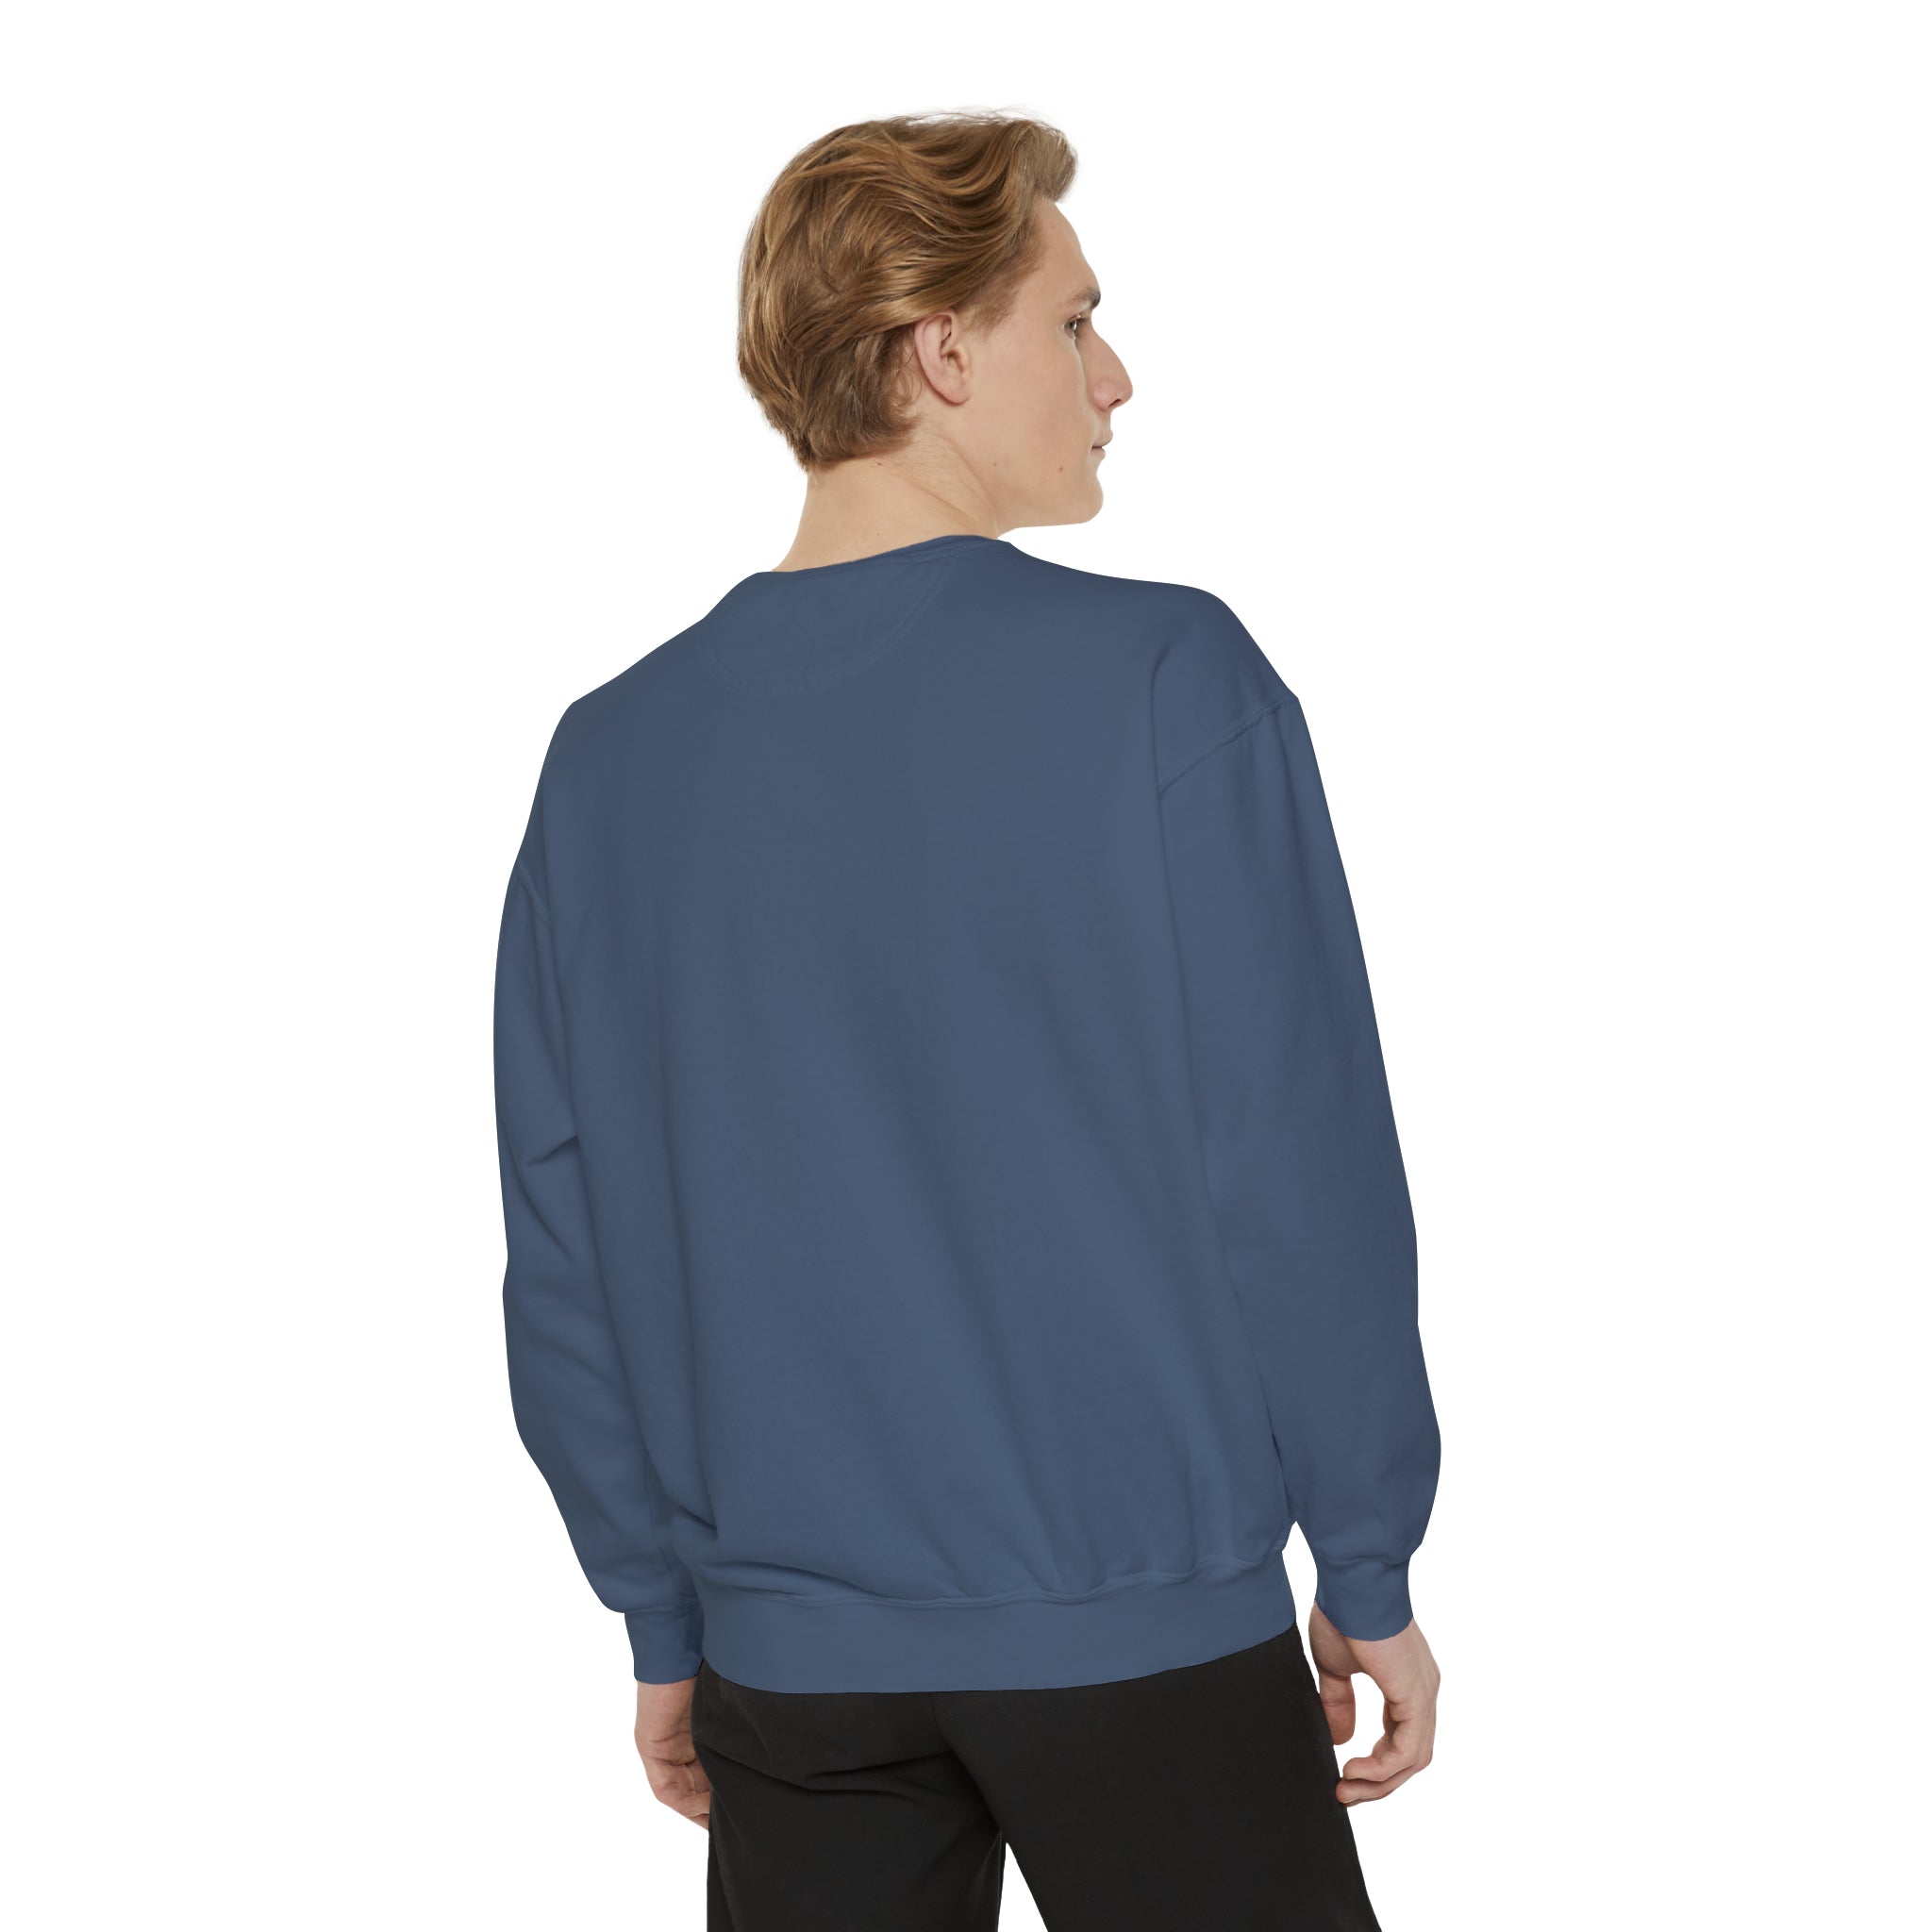 Je ne sais qoui Unisex Garment-Dyed Sweatshirt